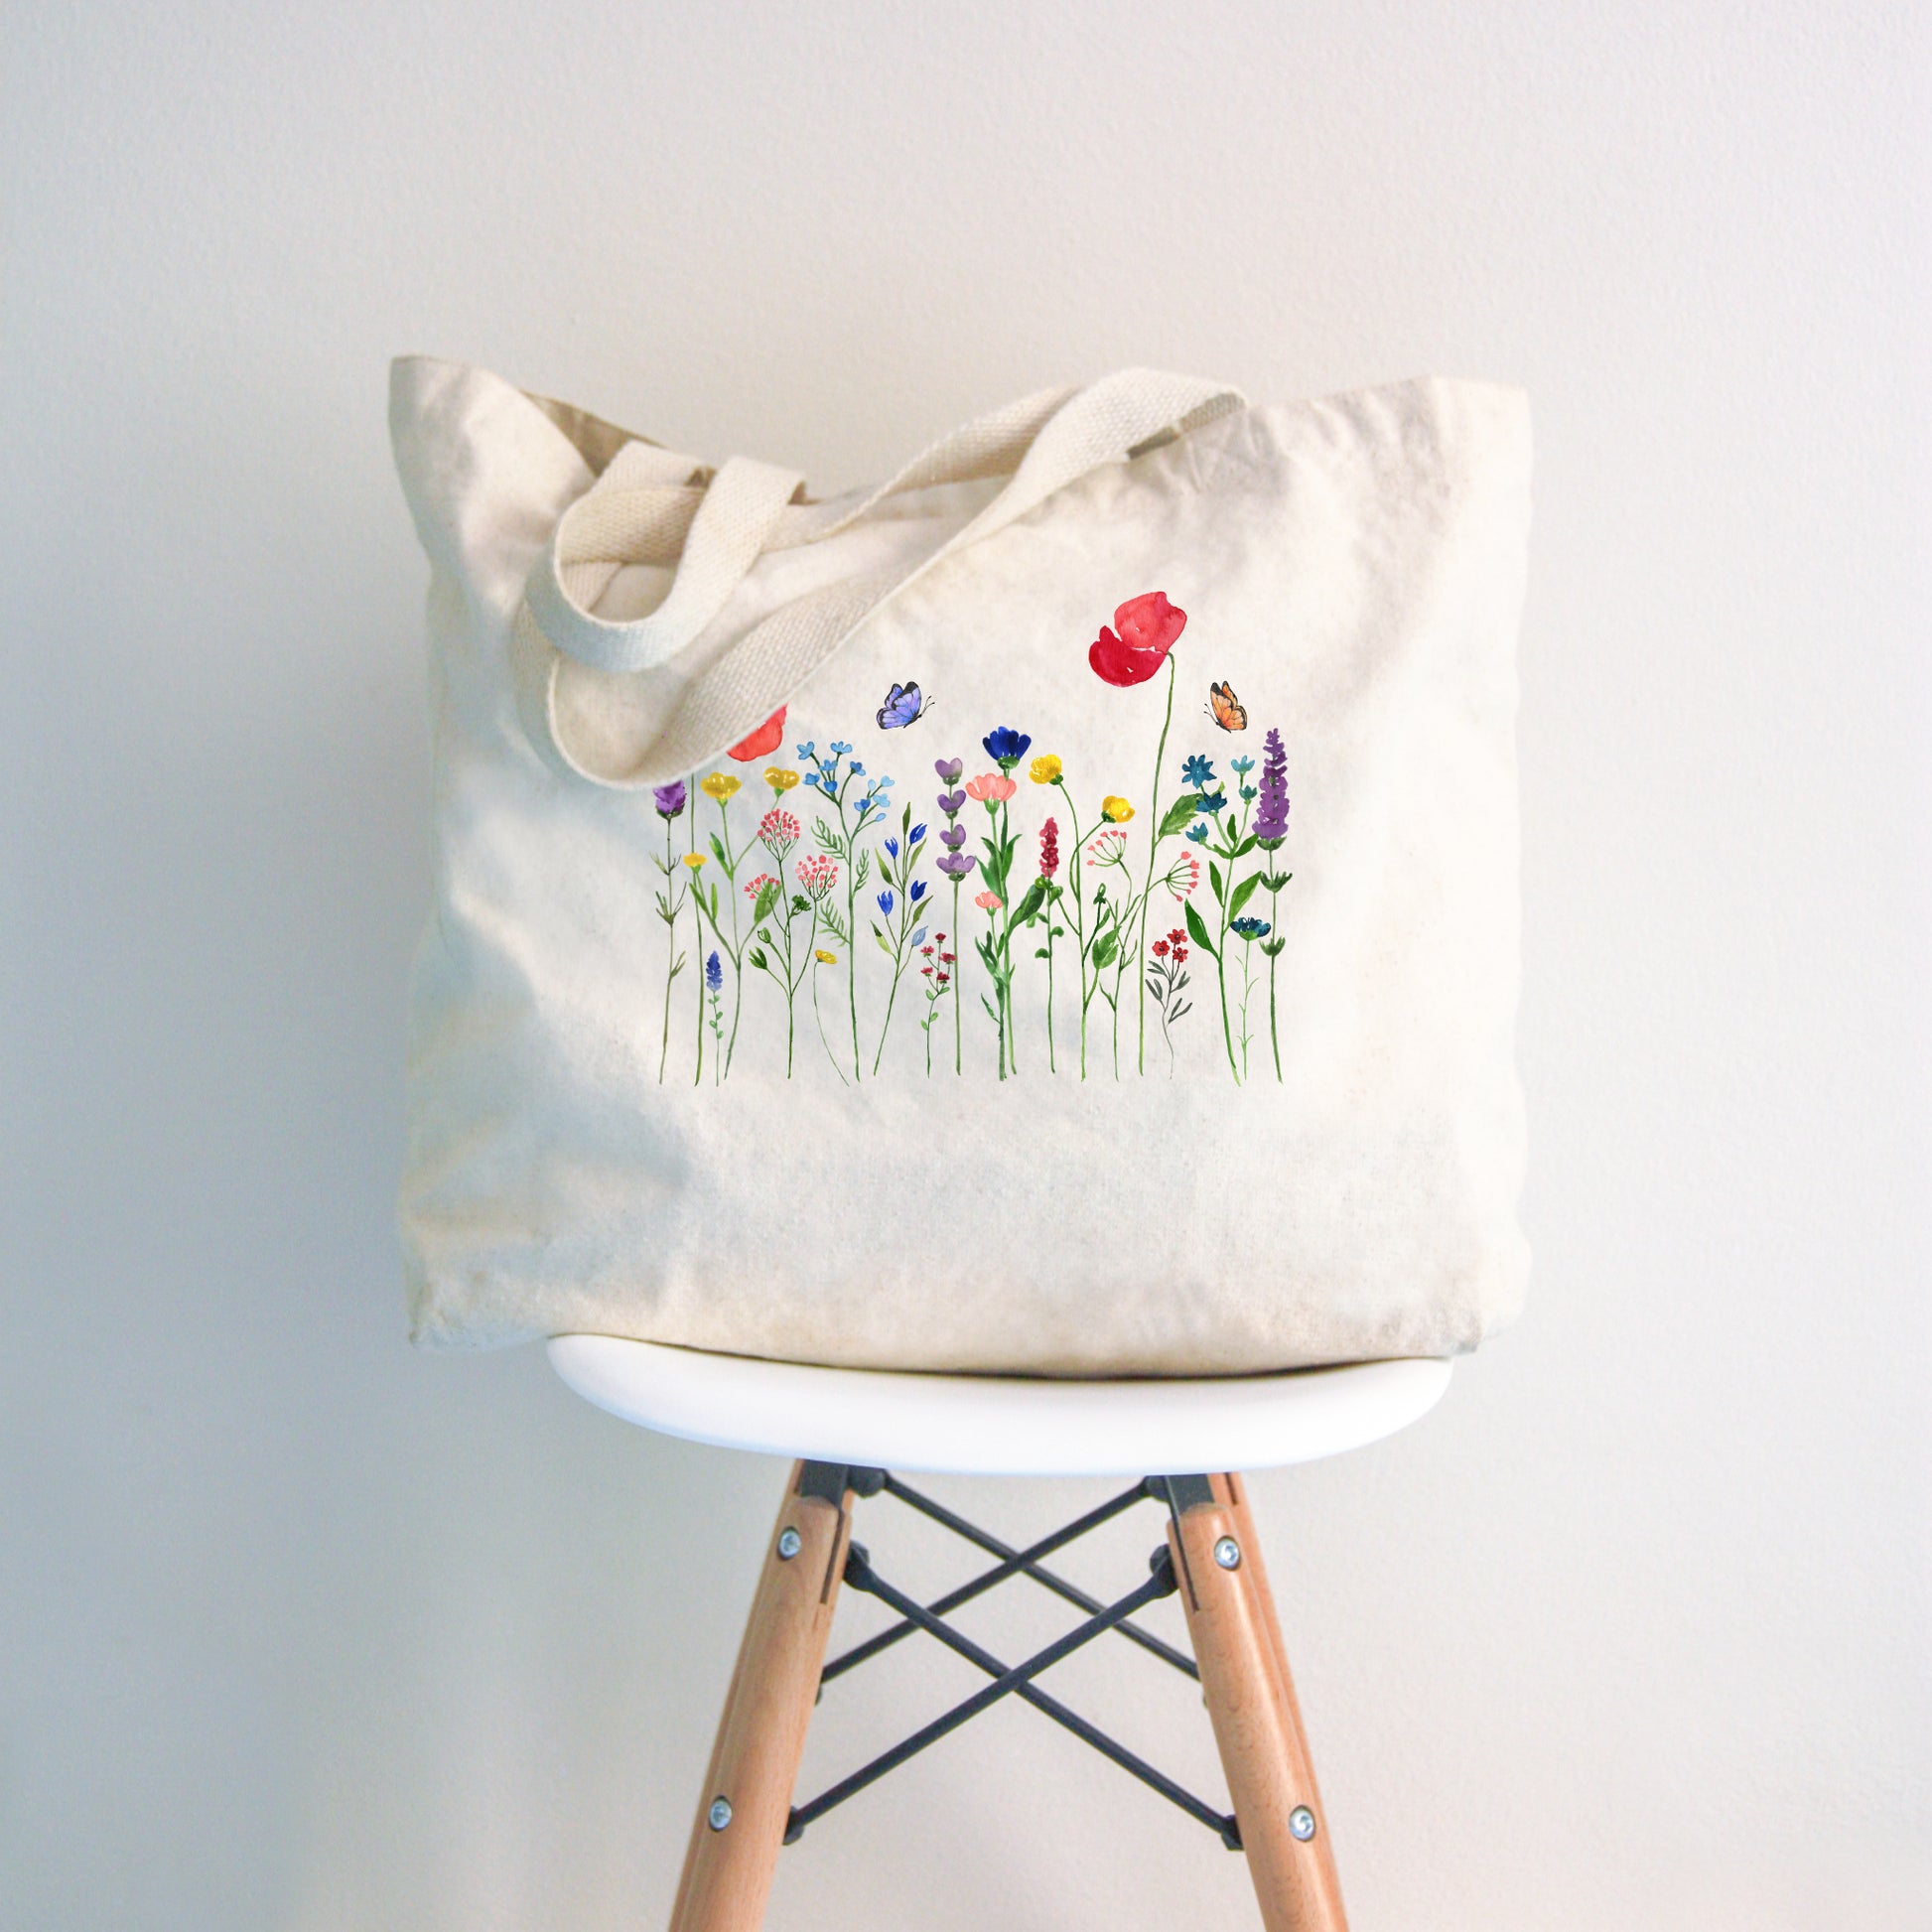 Canvas Tote Bag Tote Bag Aesthetic Cute Tote Bag Floral 